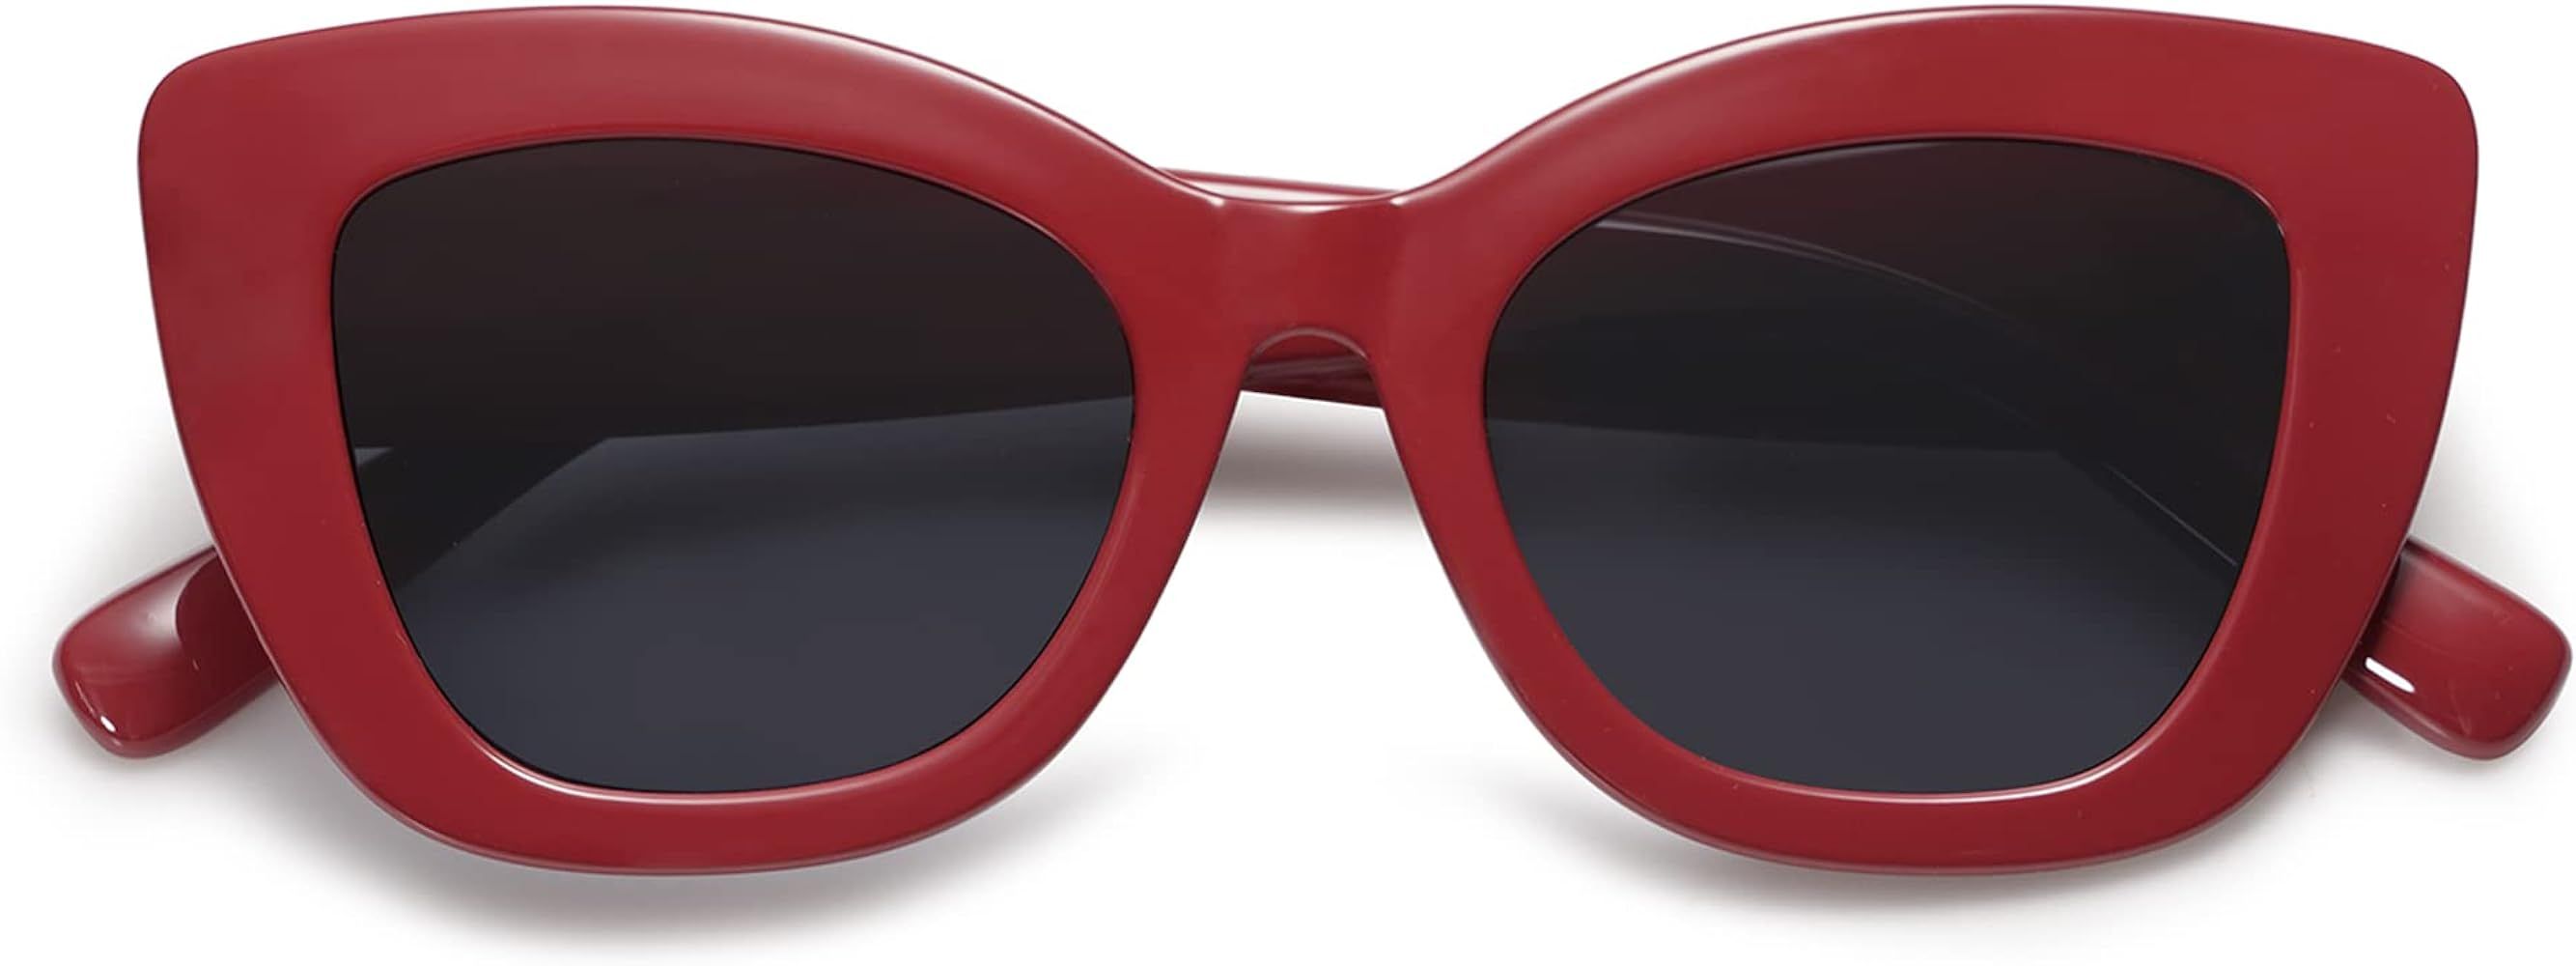 SOJOS Retro Cateye Sunglasses Women Classic Vintage Trendy Shades Sunnies Gafas de sole UV400 Protection SJ2190 | Amazon (US)